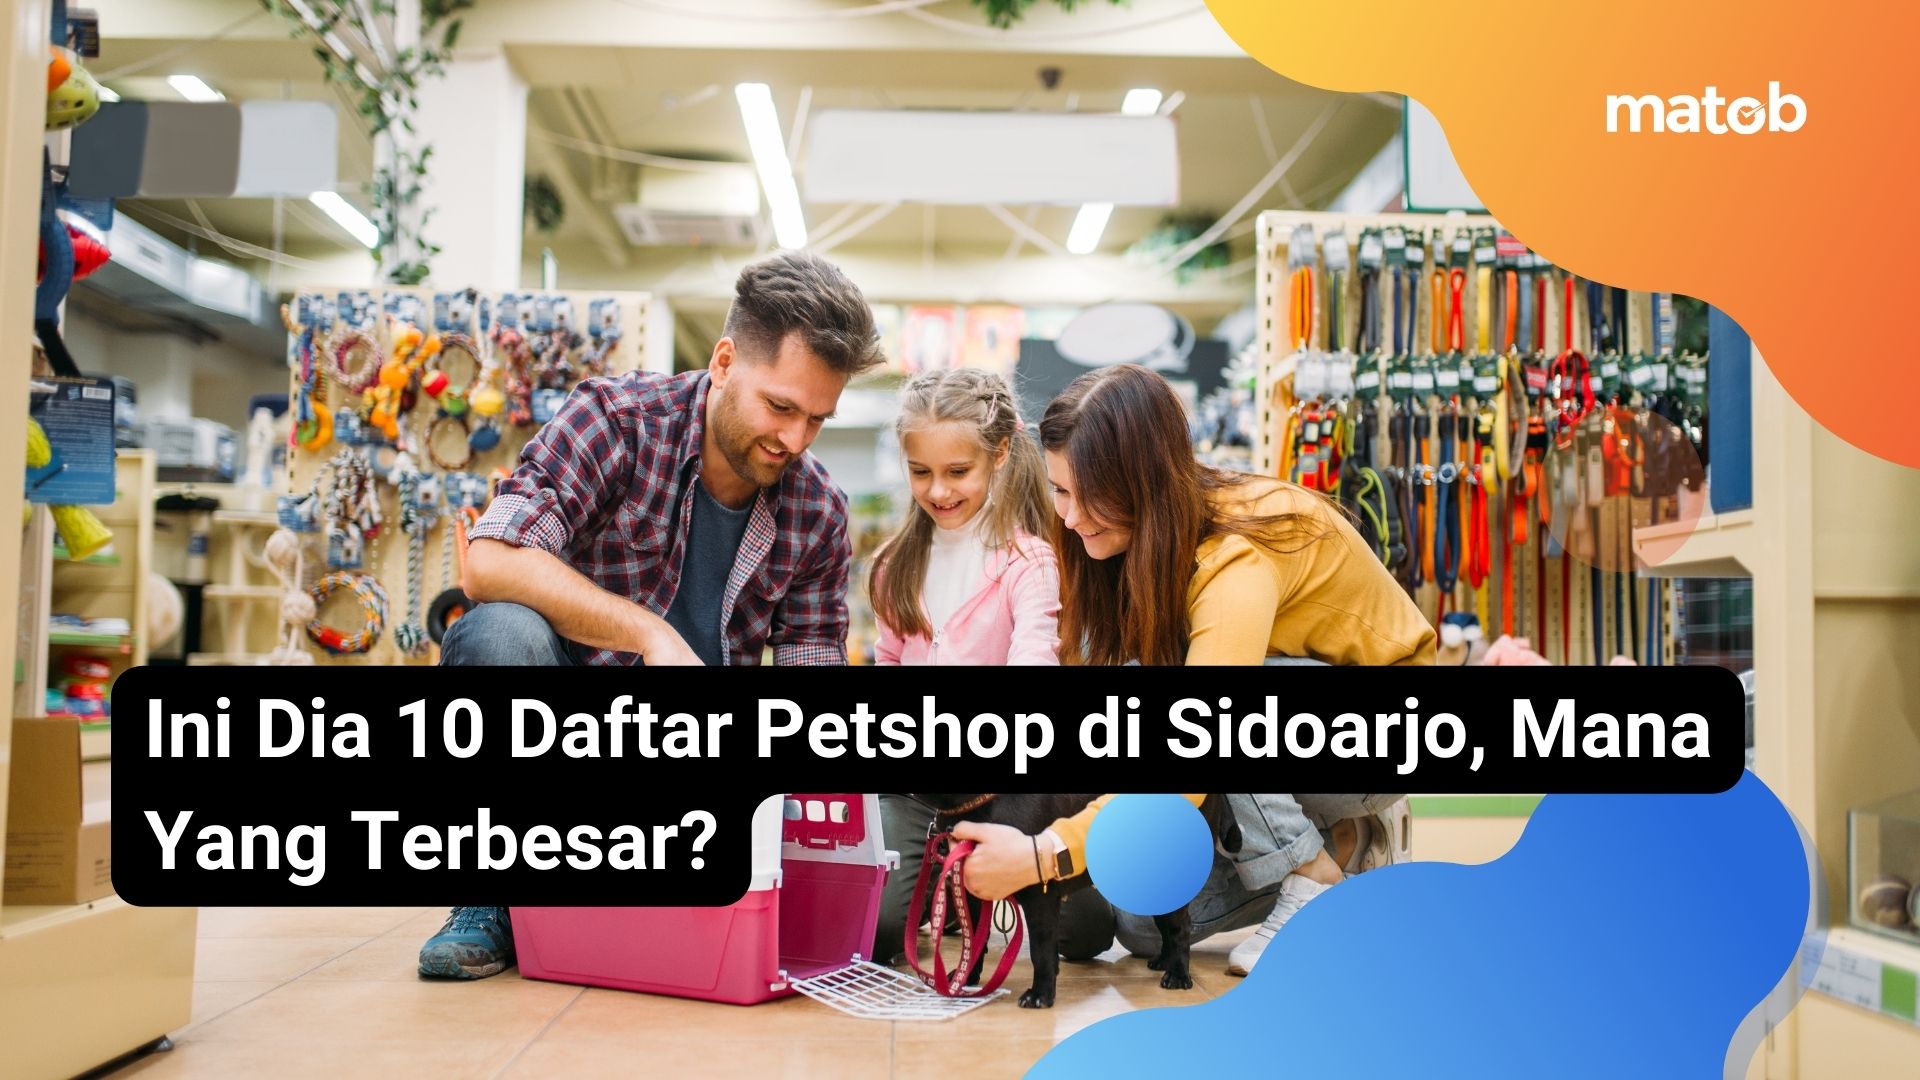 Ini Dia 10 Daftar Petshop di Sidoarjo, Mana Yang Terbesar?